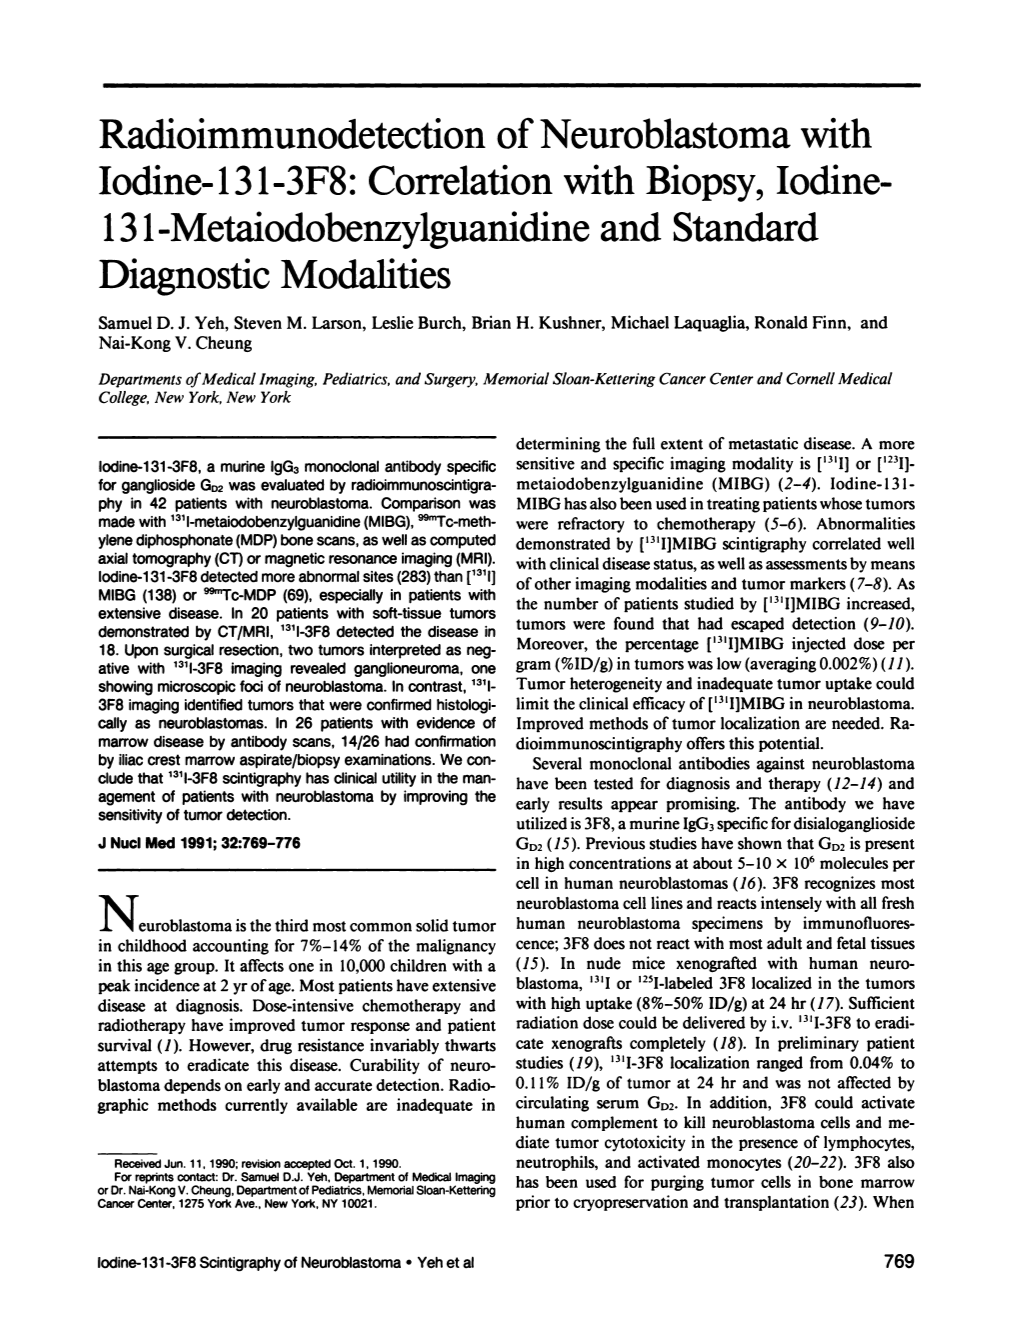 Radioimmunodetection of Neuroblastoma with Iodine- 13 1-.3F8